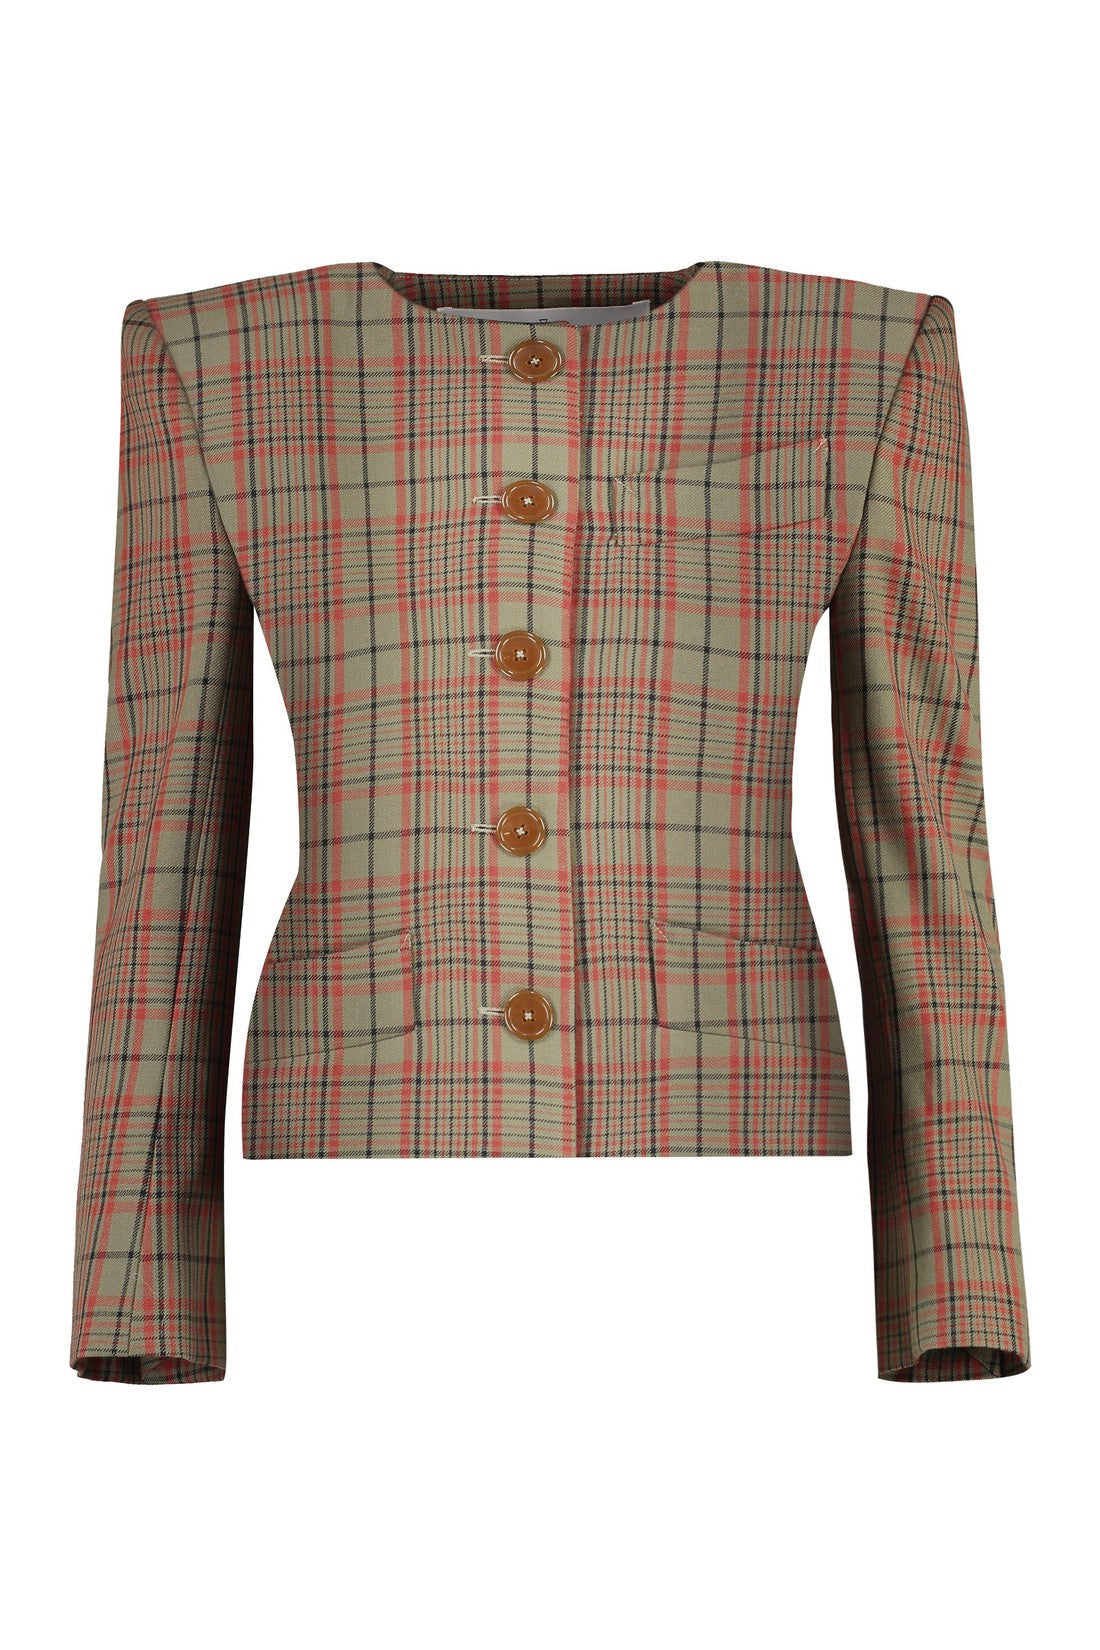 Vivienne Westwood-OUTLET-SALE-Checked wood jacket-ARCHIVIST